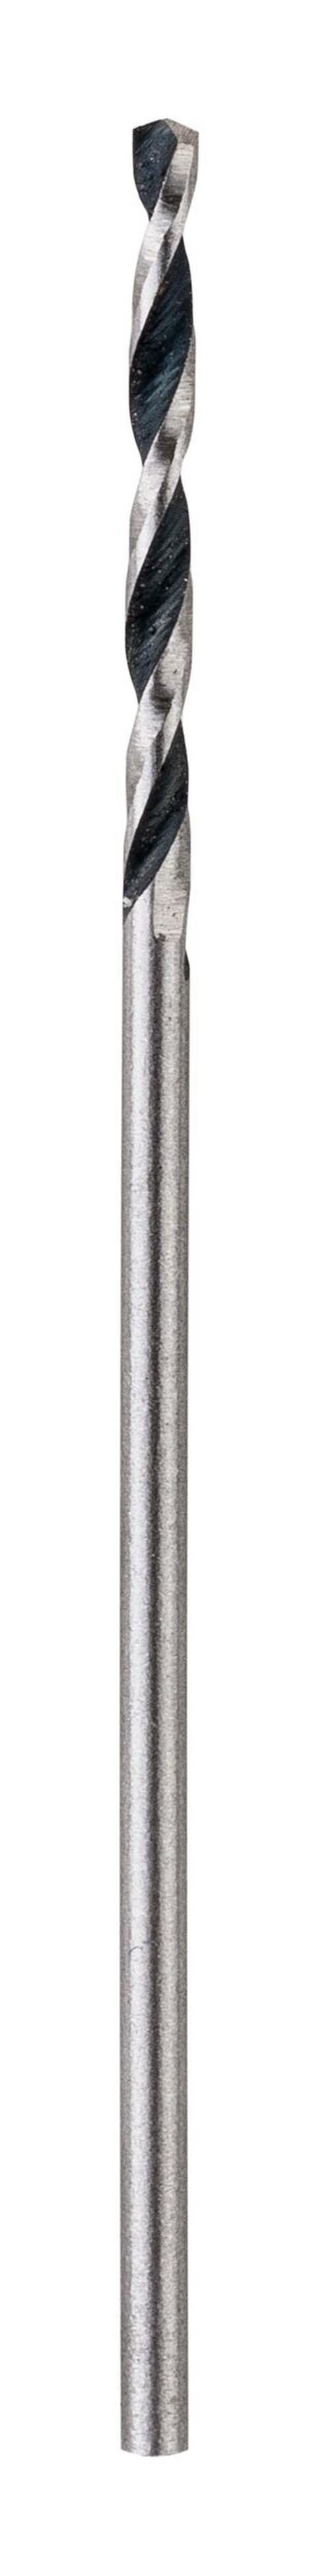 BOSCH Metallbohrer, (10 Metallspiralbohrer - mm (DIN 1 Stück), HSS PointTeQ - 338) 10er-Pack